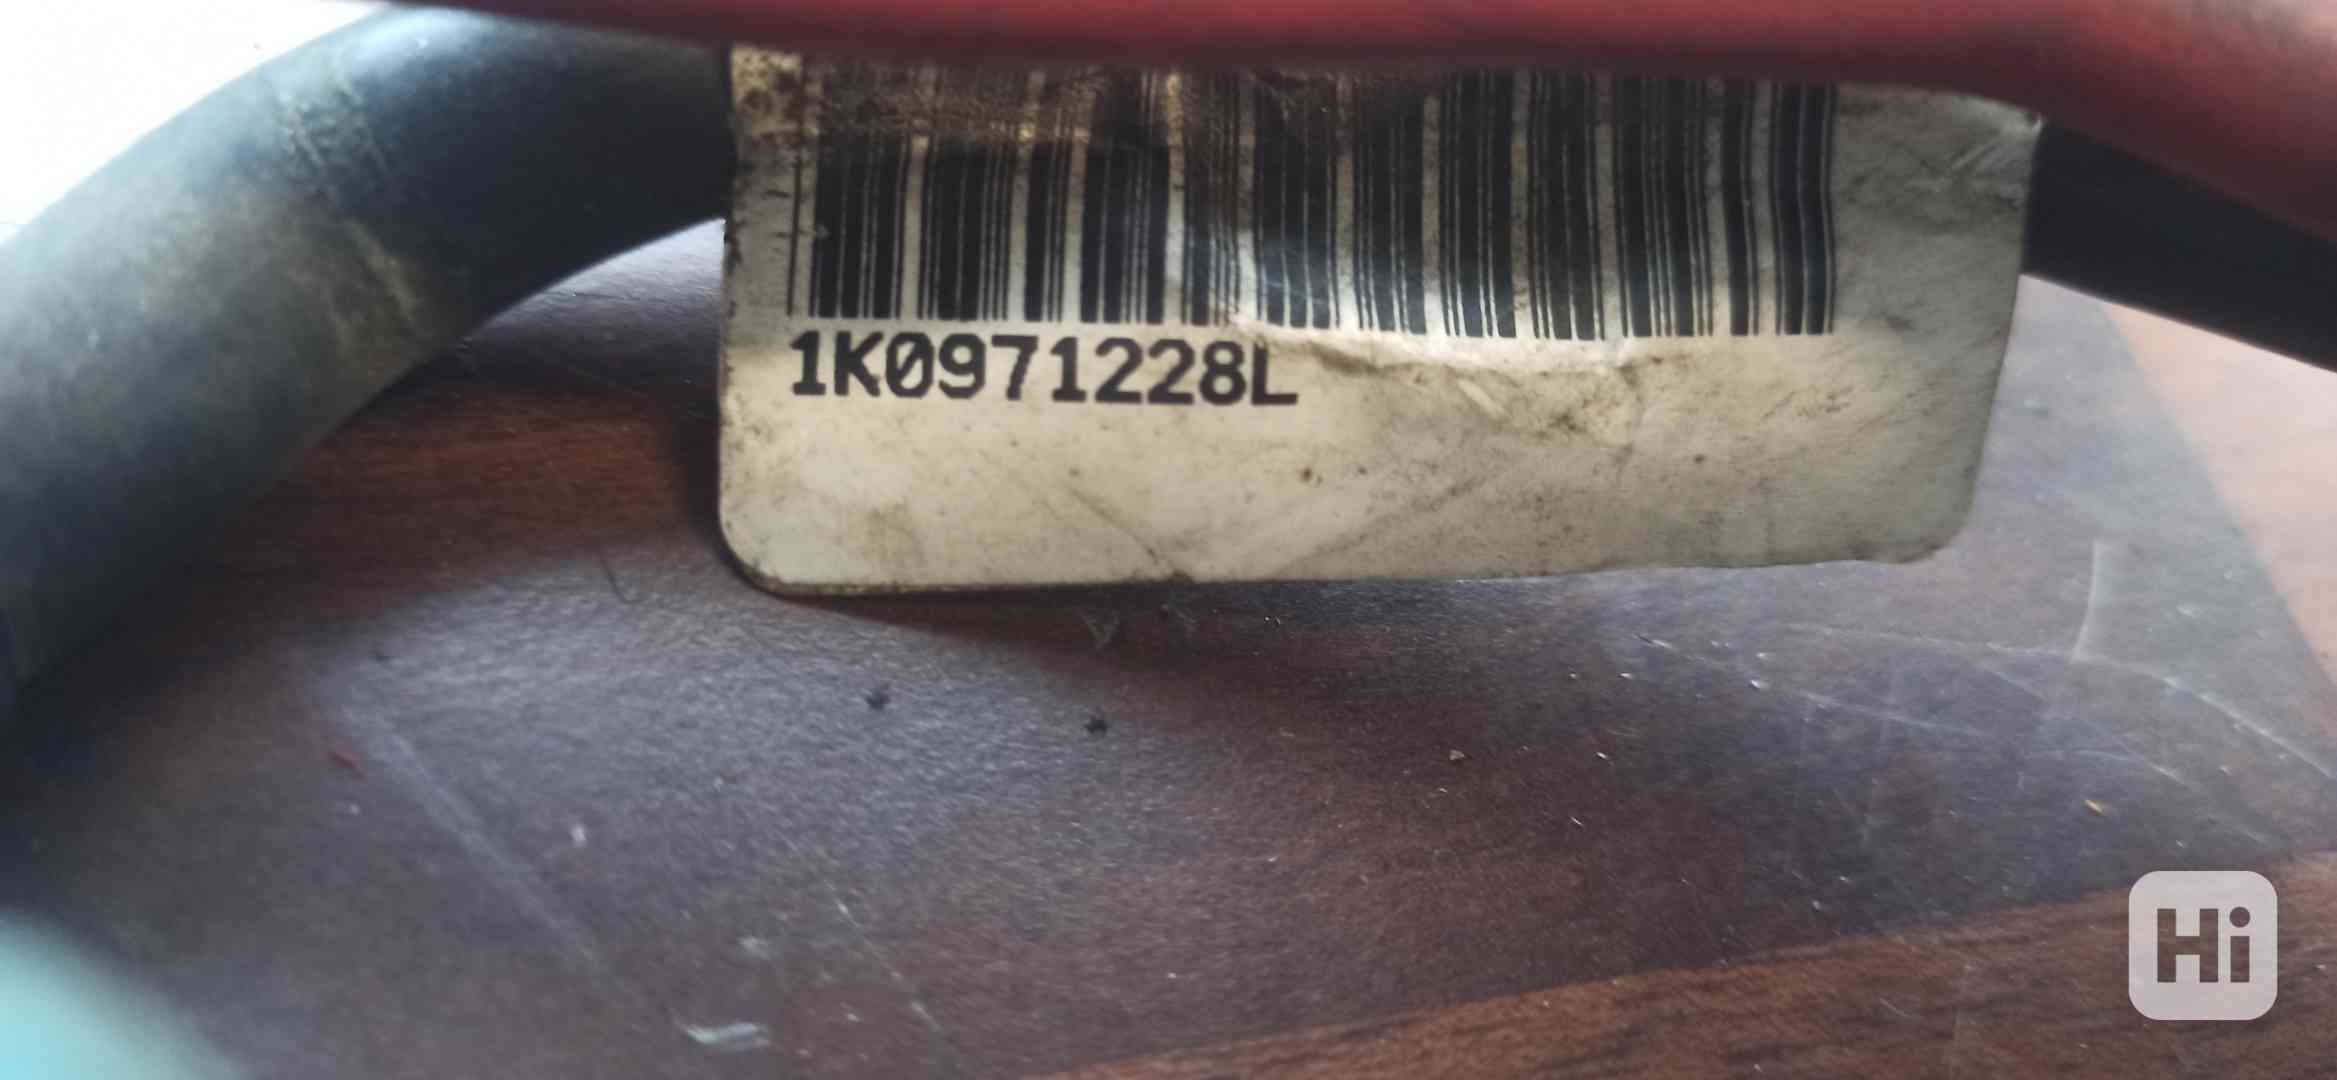 Kabel baterie "+" z  VW passat B6 1K0 971 228 L - foto 1